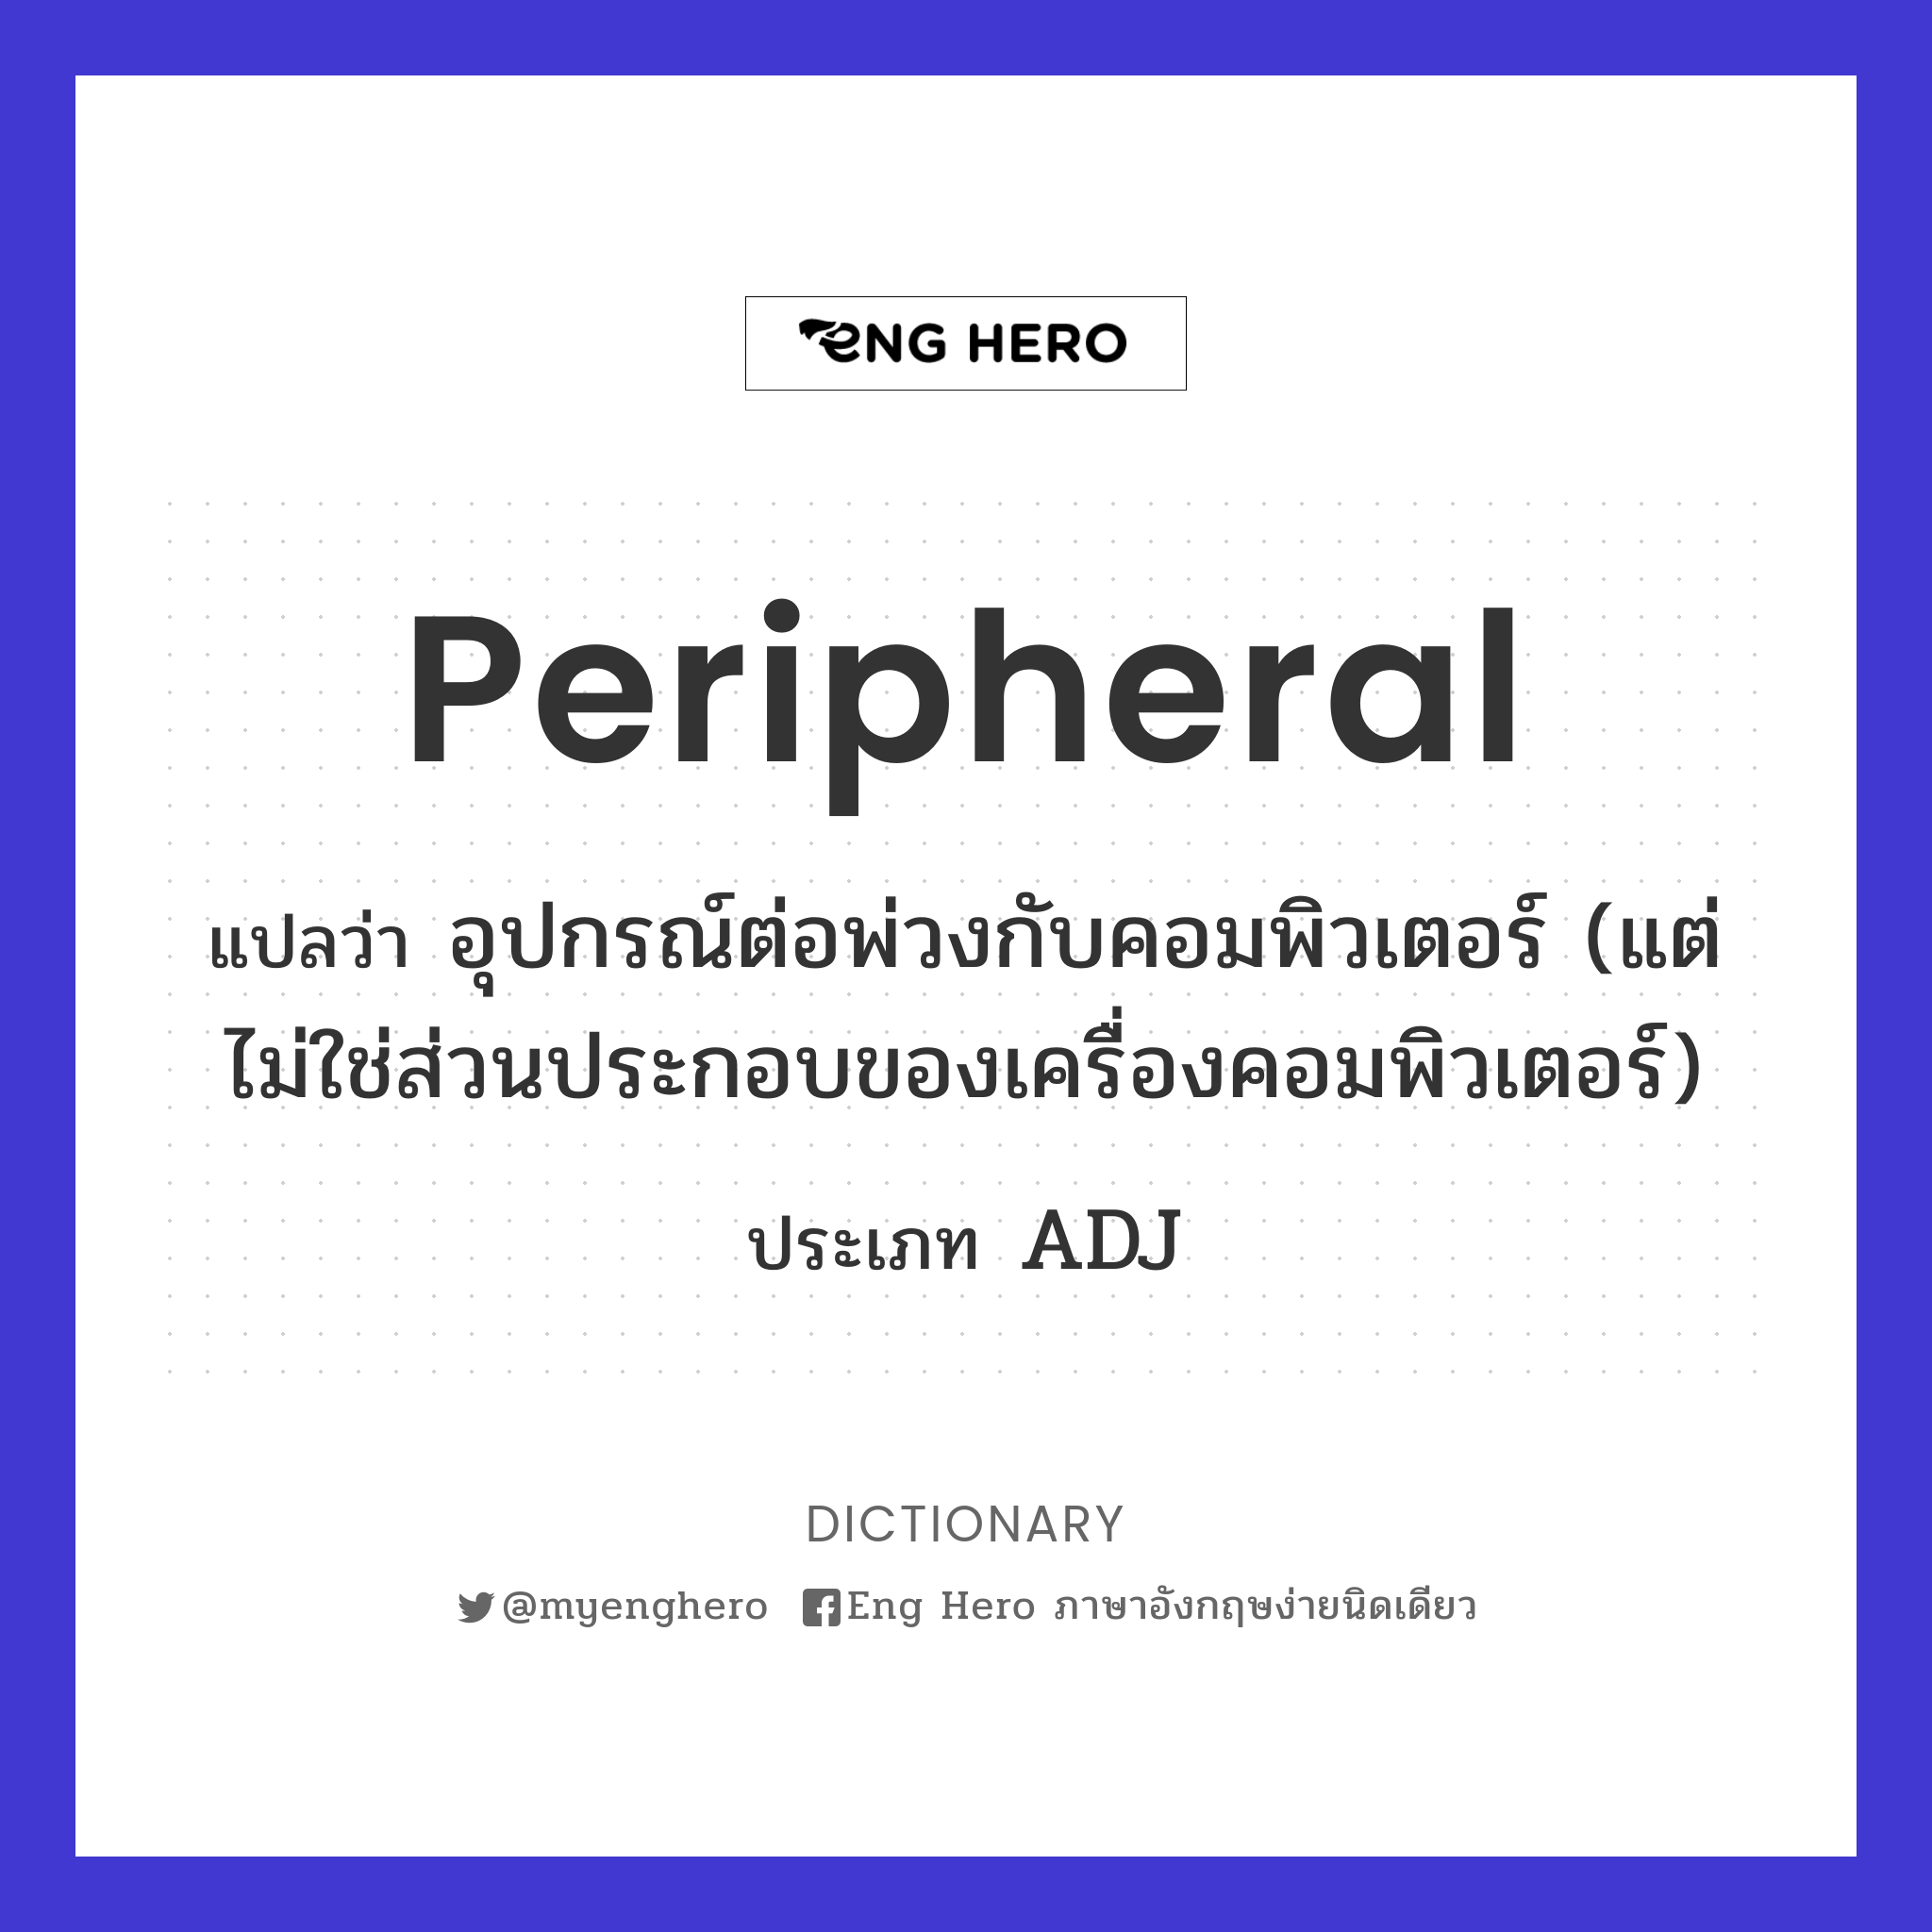 peripheral